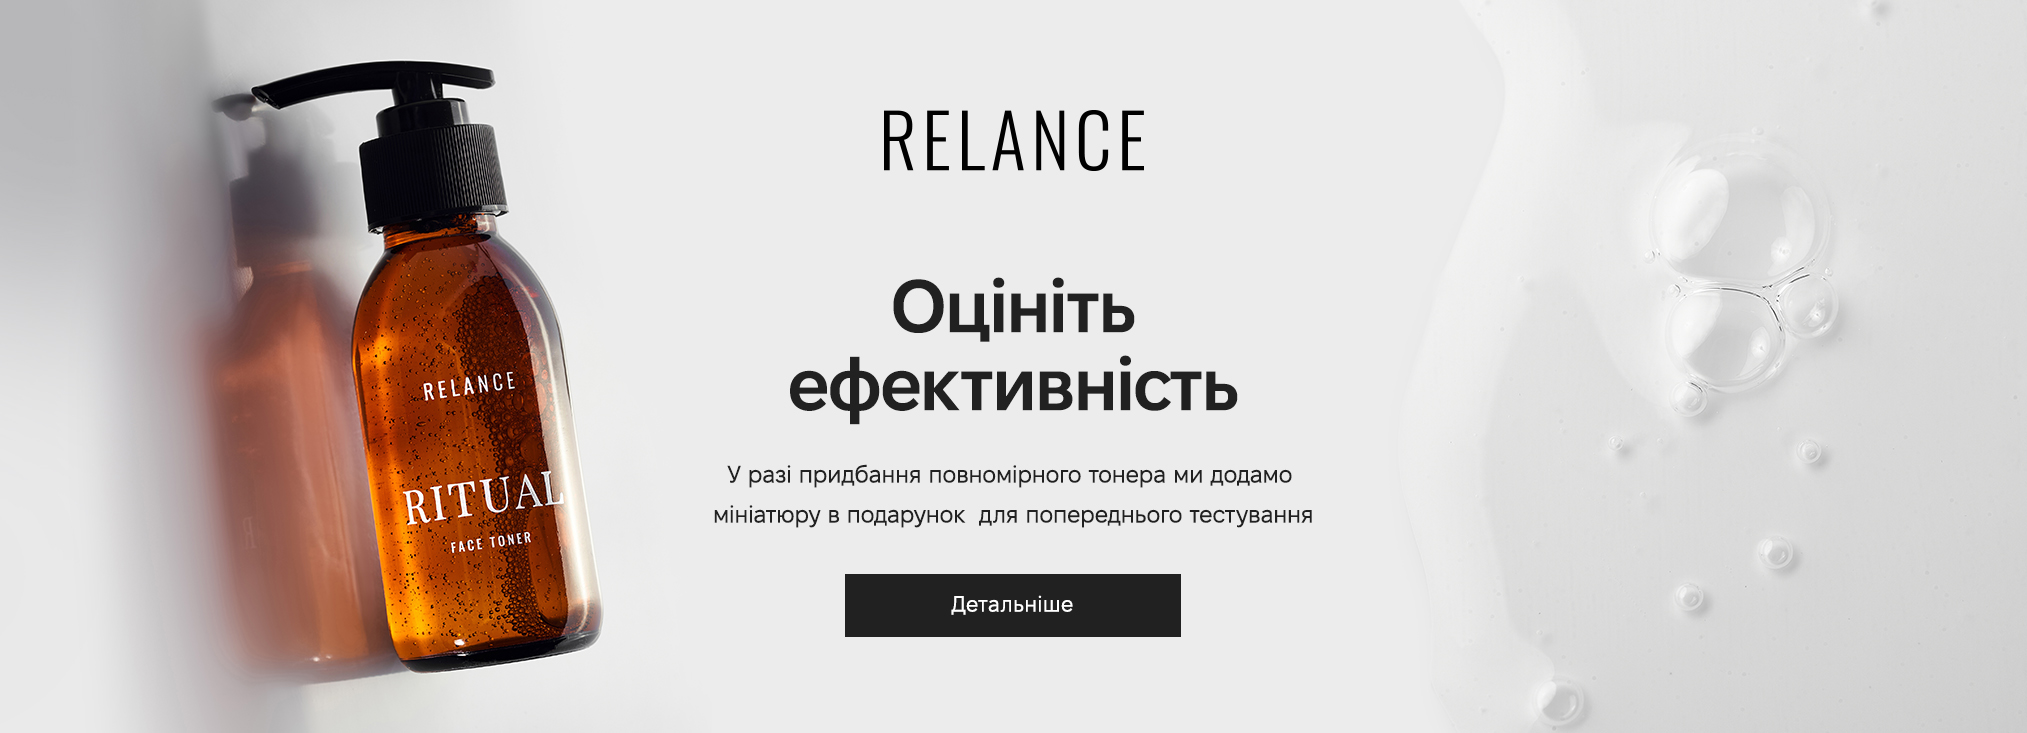 Relance983259